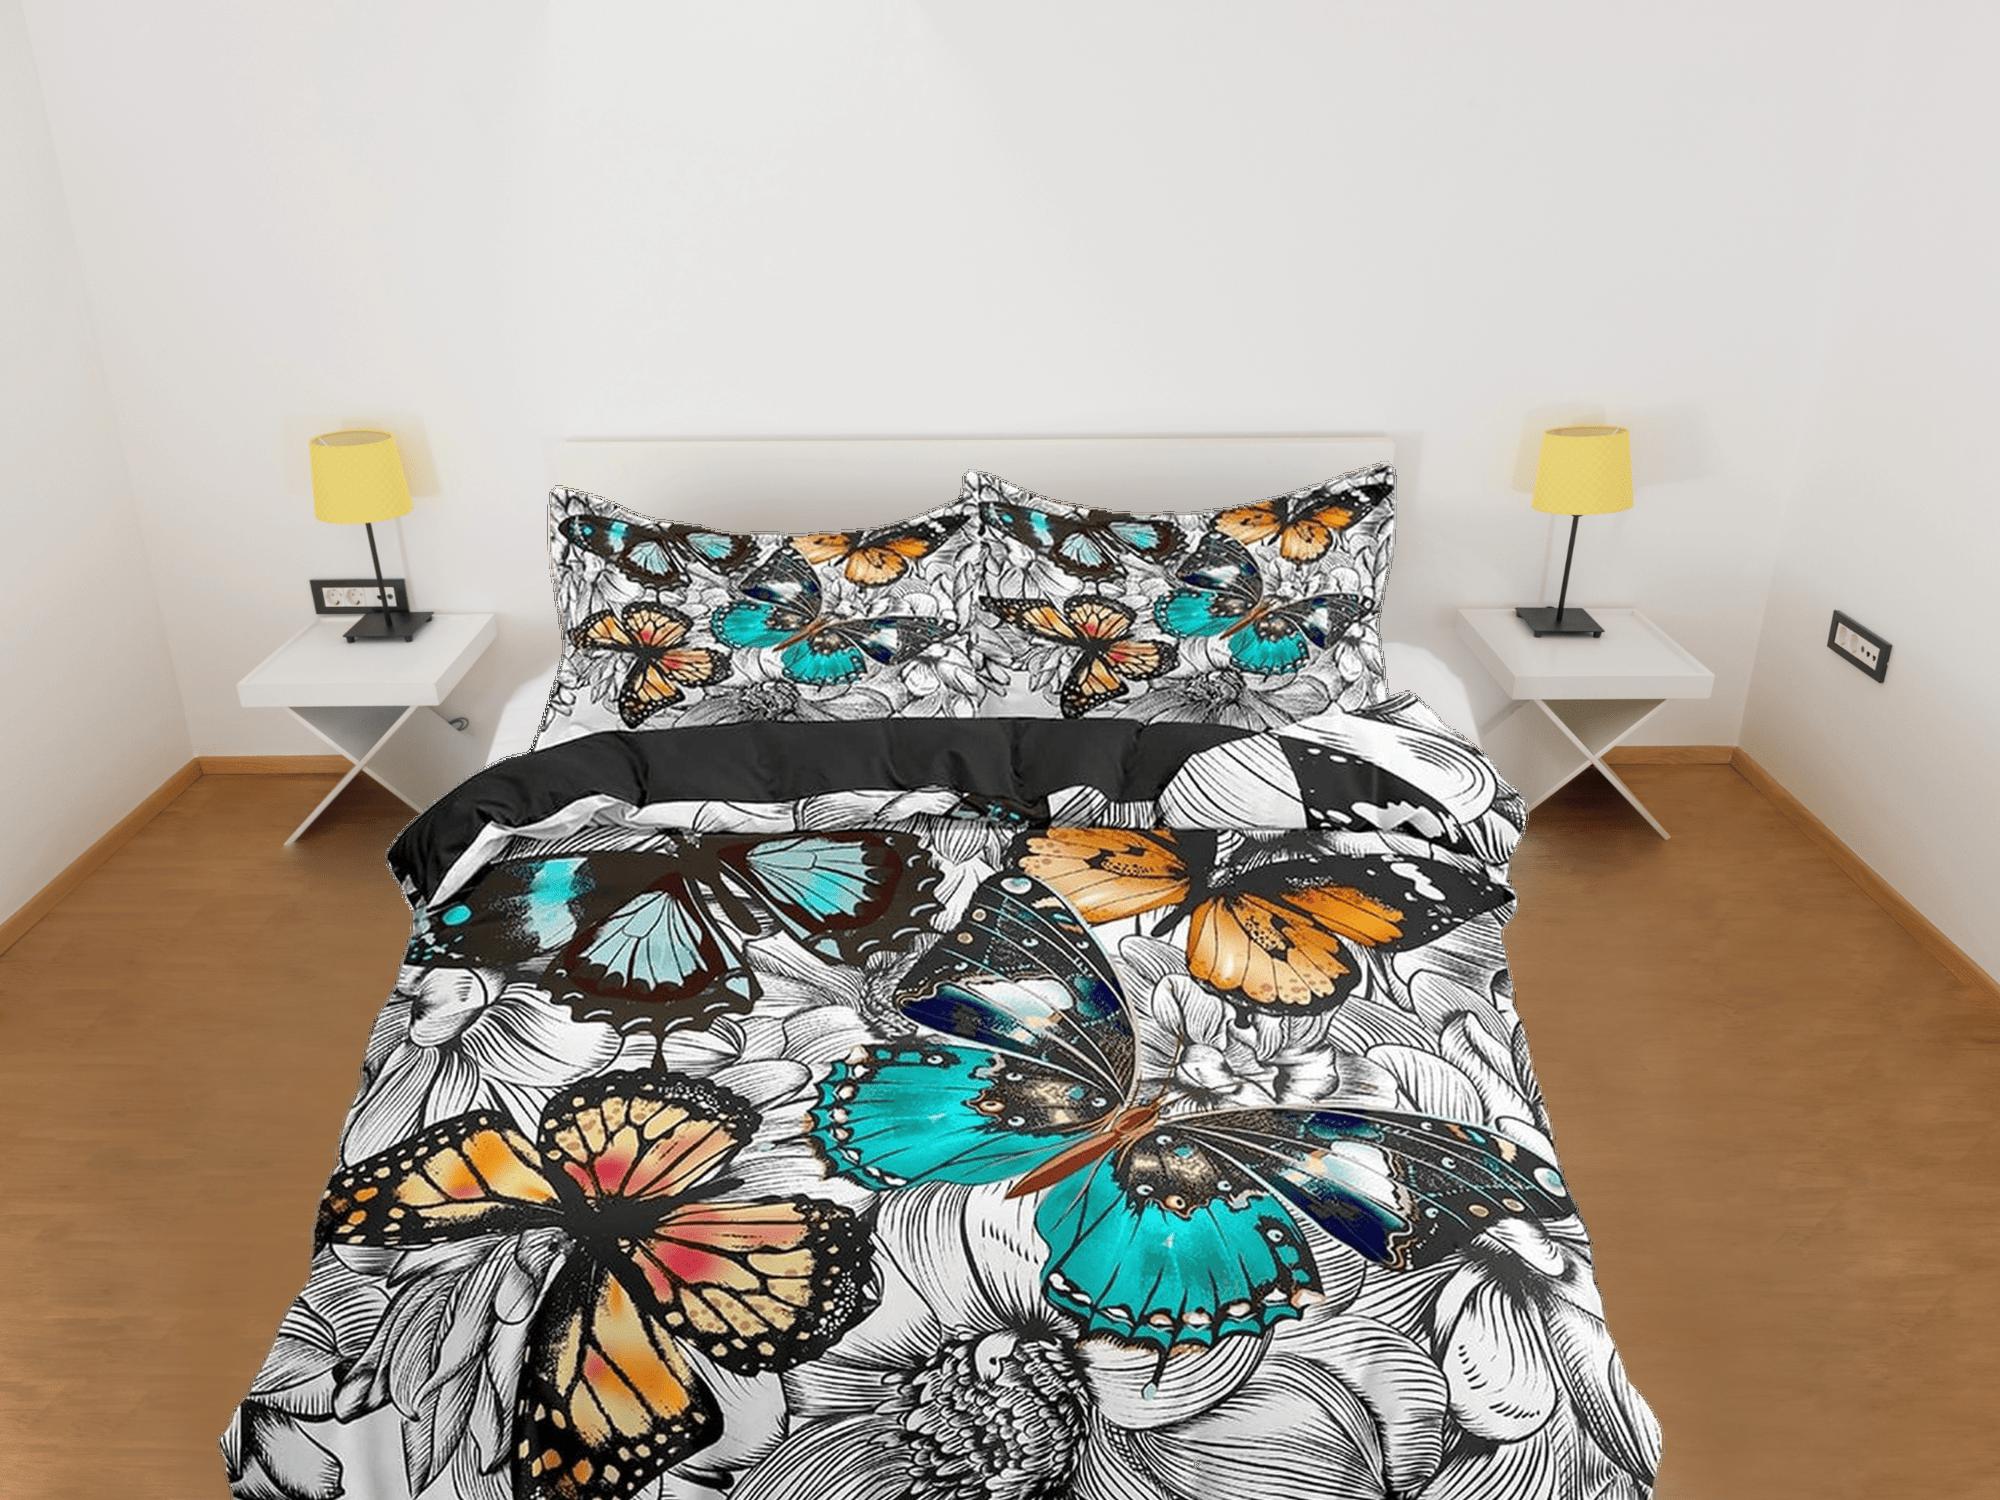 daintyduvet Colorful monarch butterfly bedding duvet cover boho chic dorm bedding full size adult duvet king queen twin, nursery toddler bedding